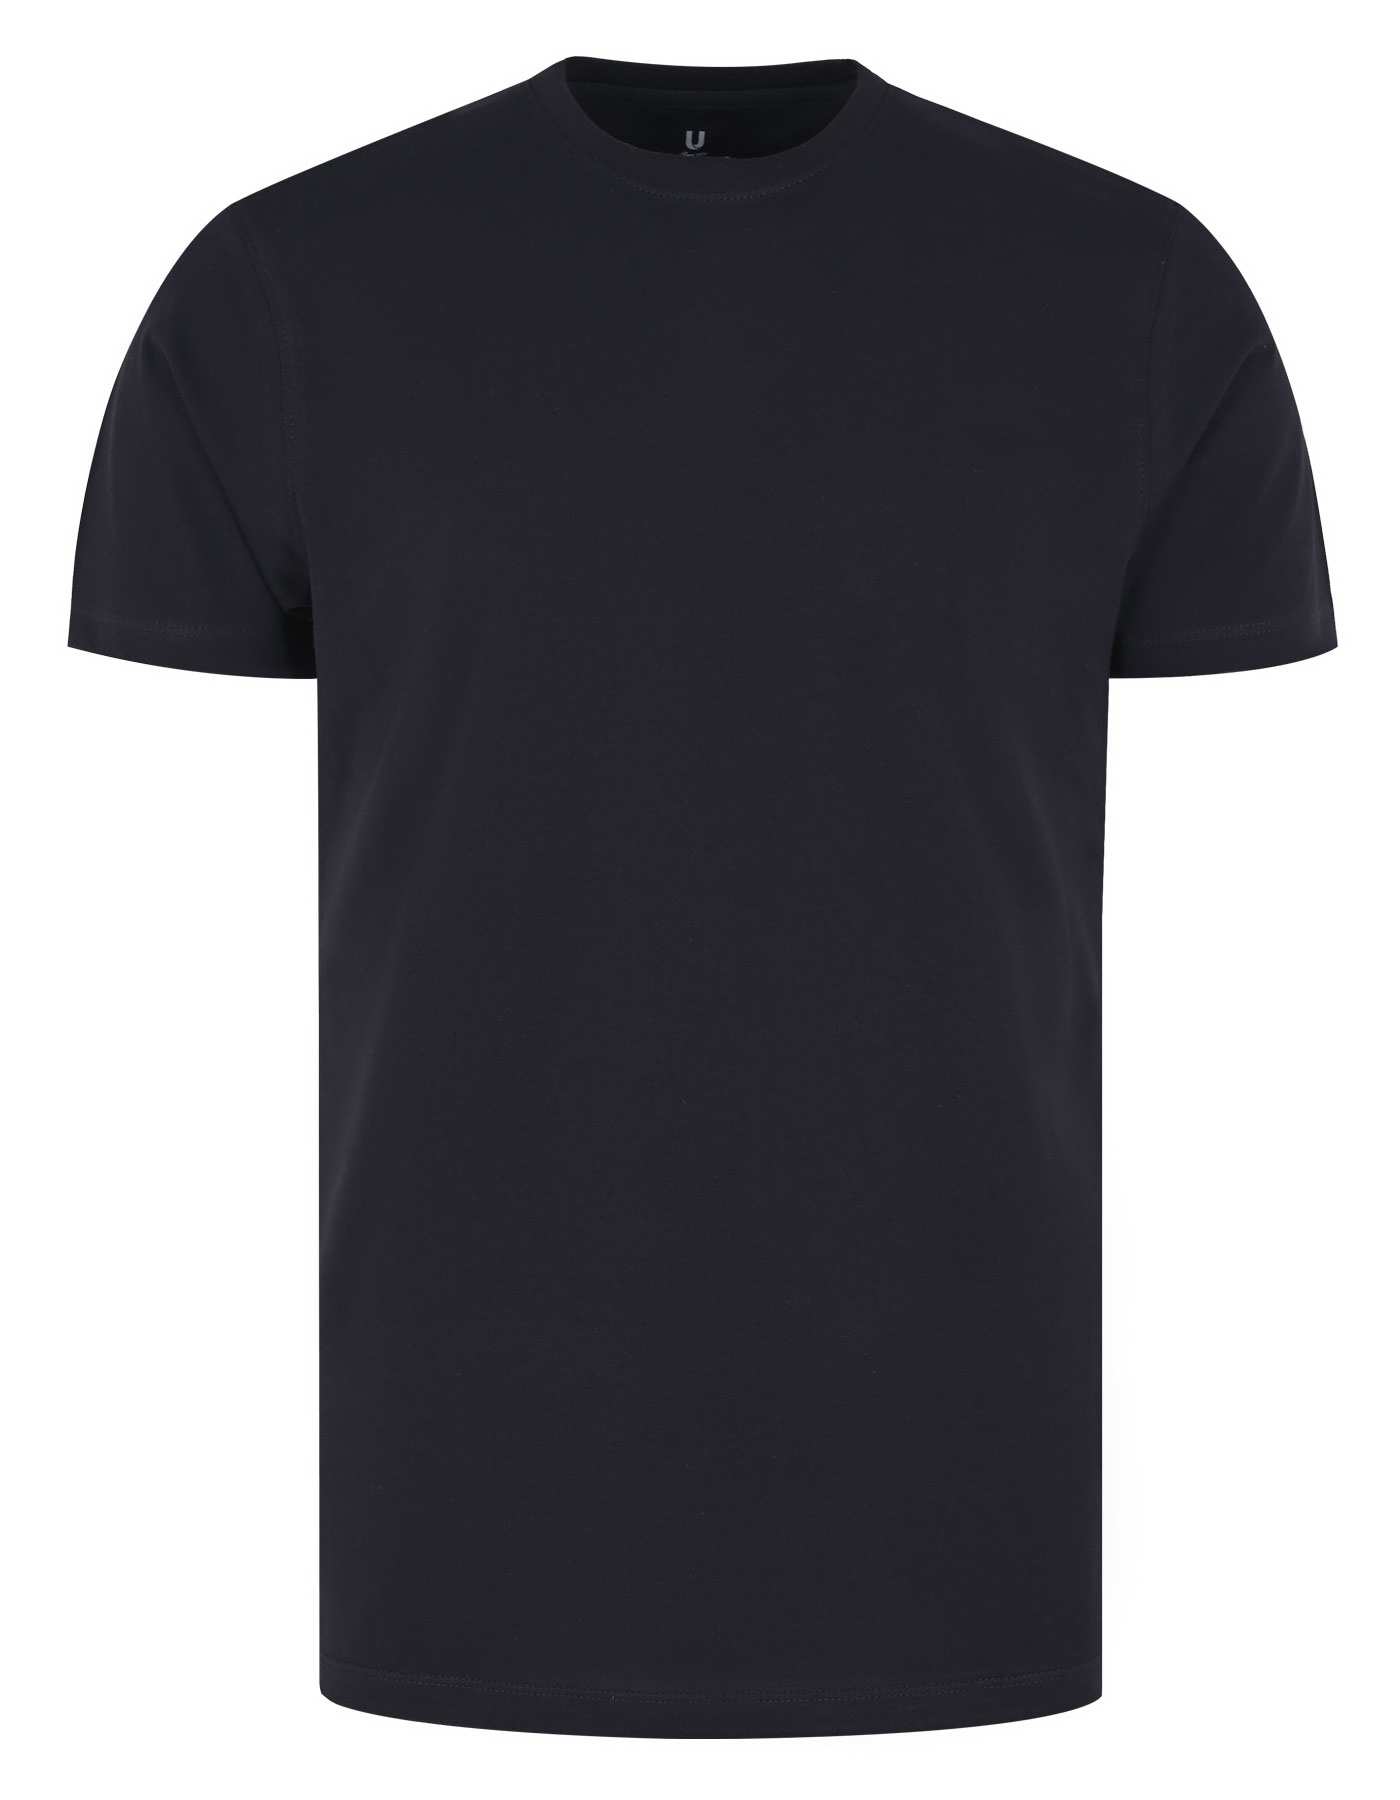 Black T shirt Pajama Set For Men